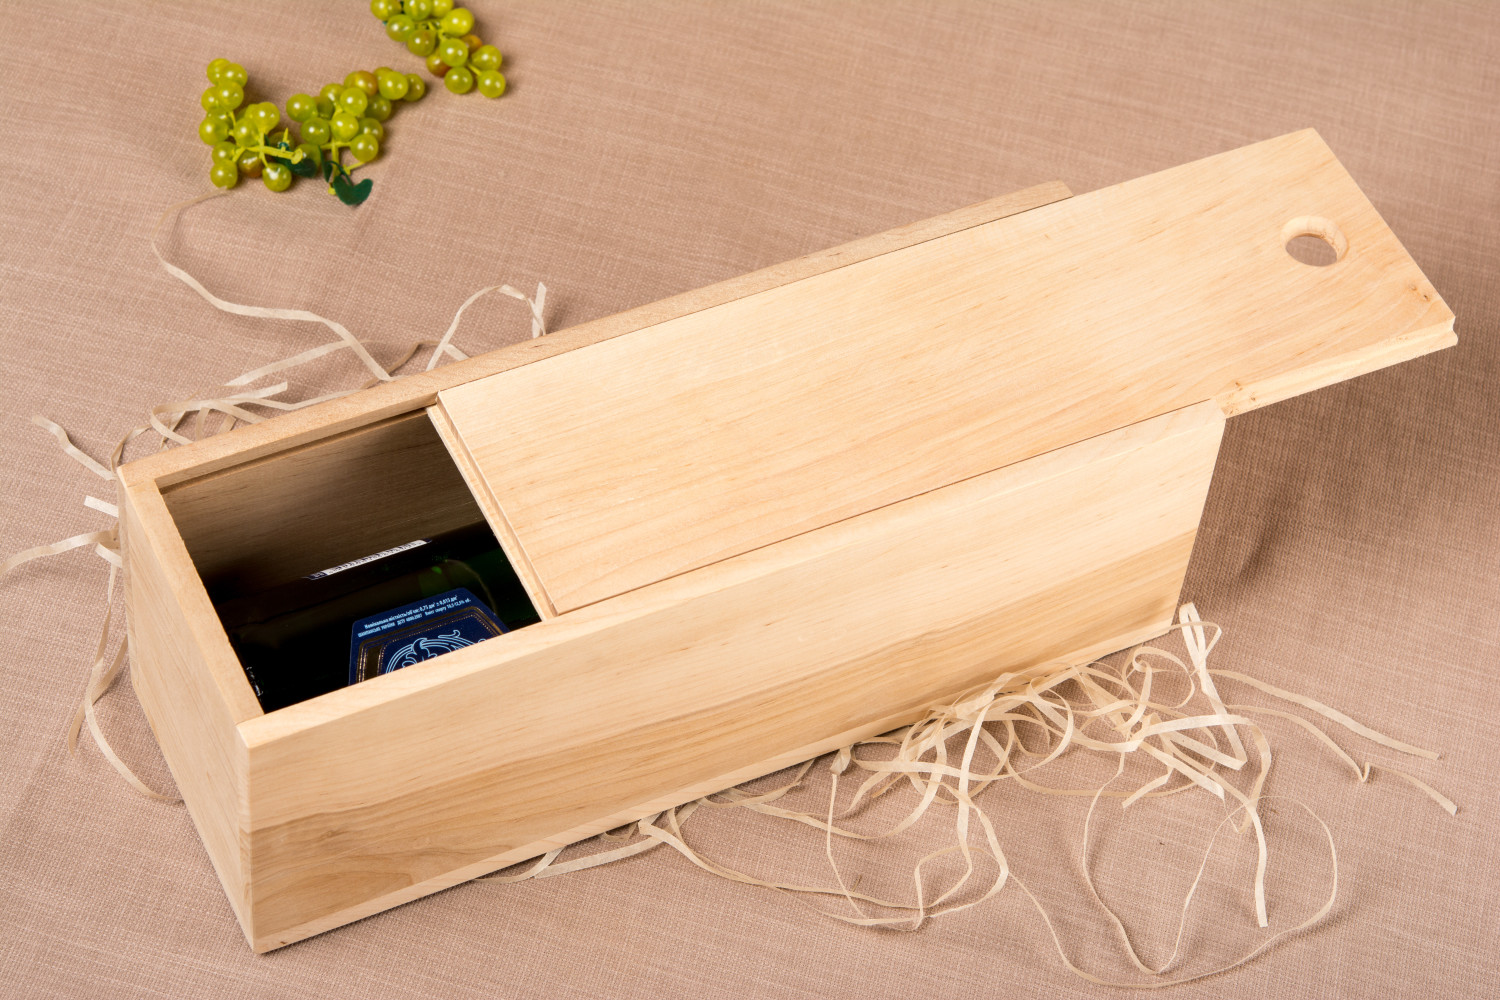 Handmade wooden box designer box for bottles kitchen decor wooden box photo 1